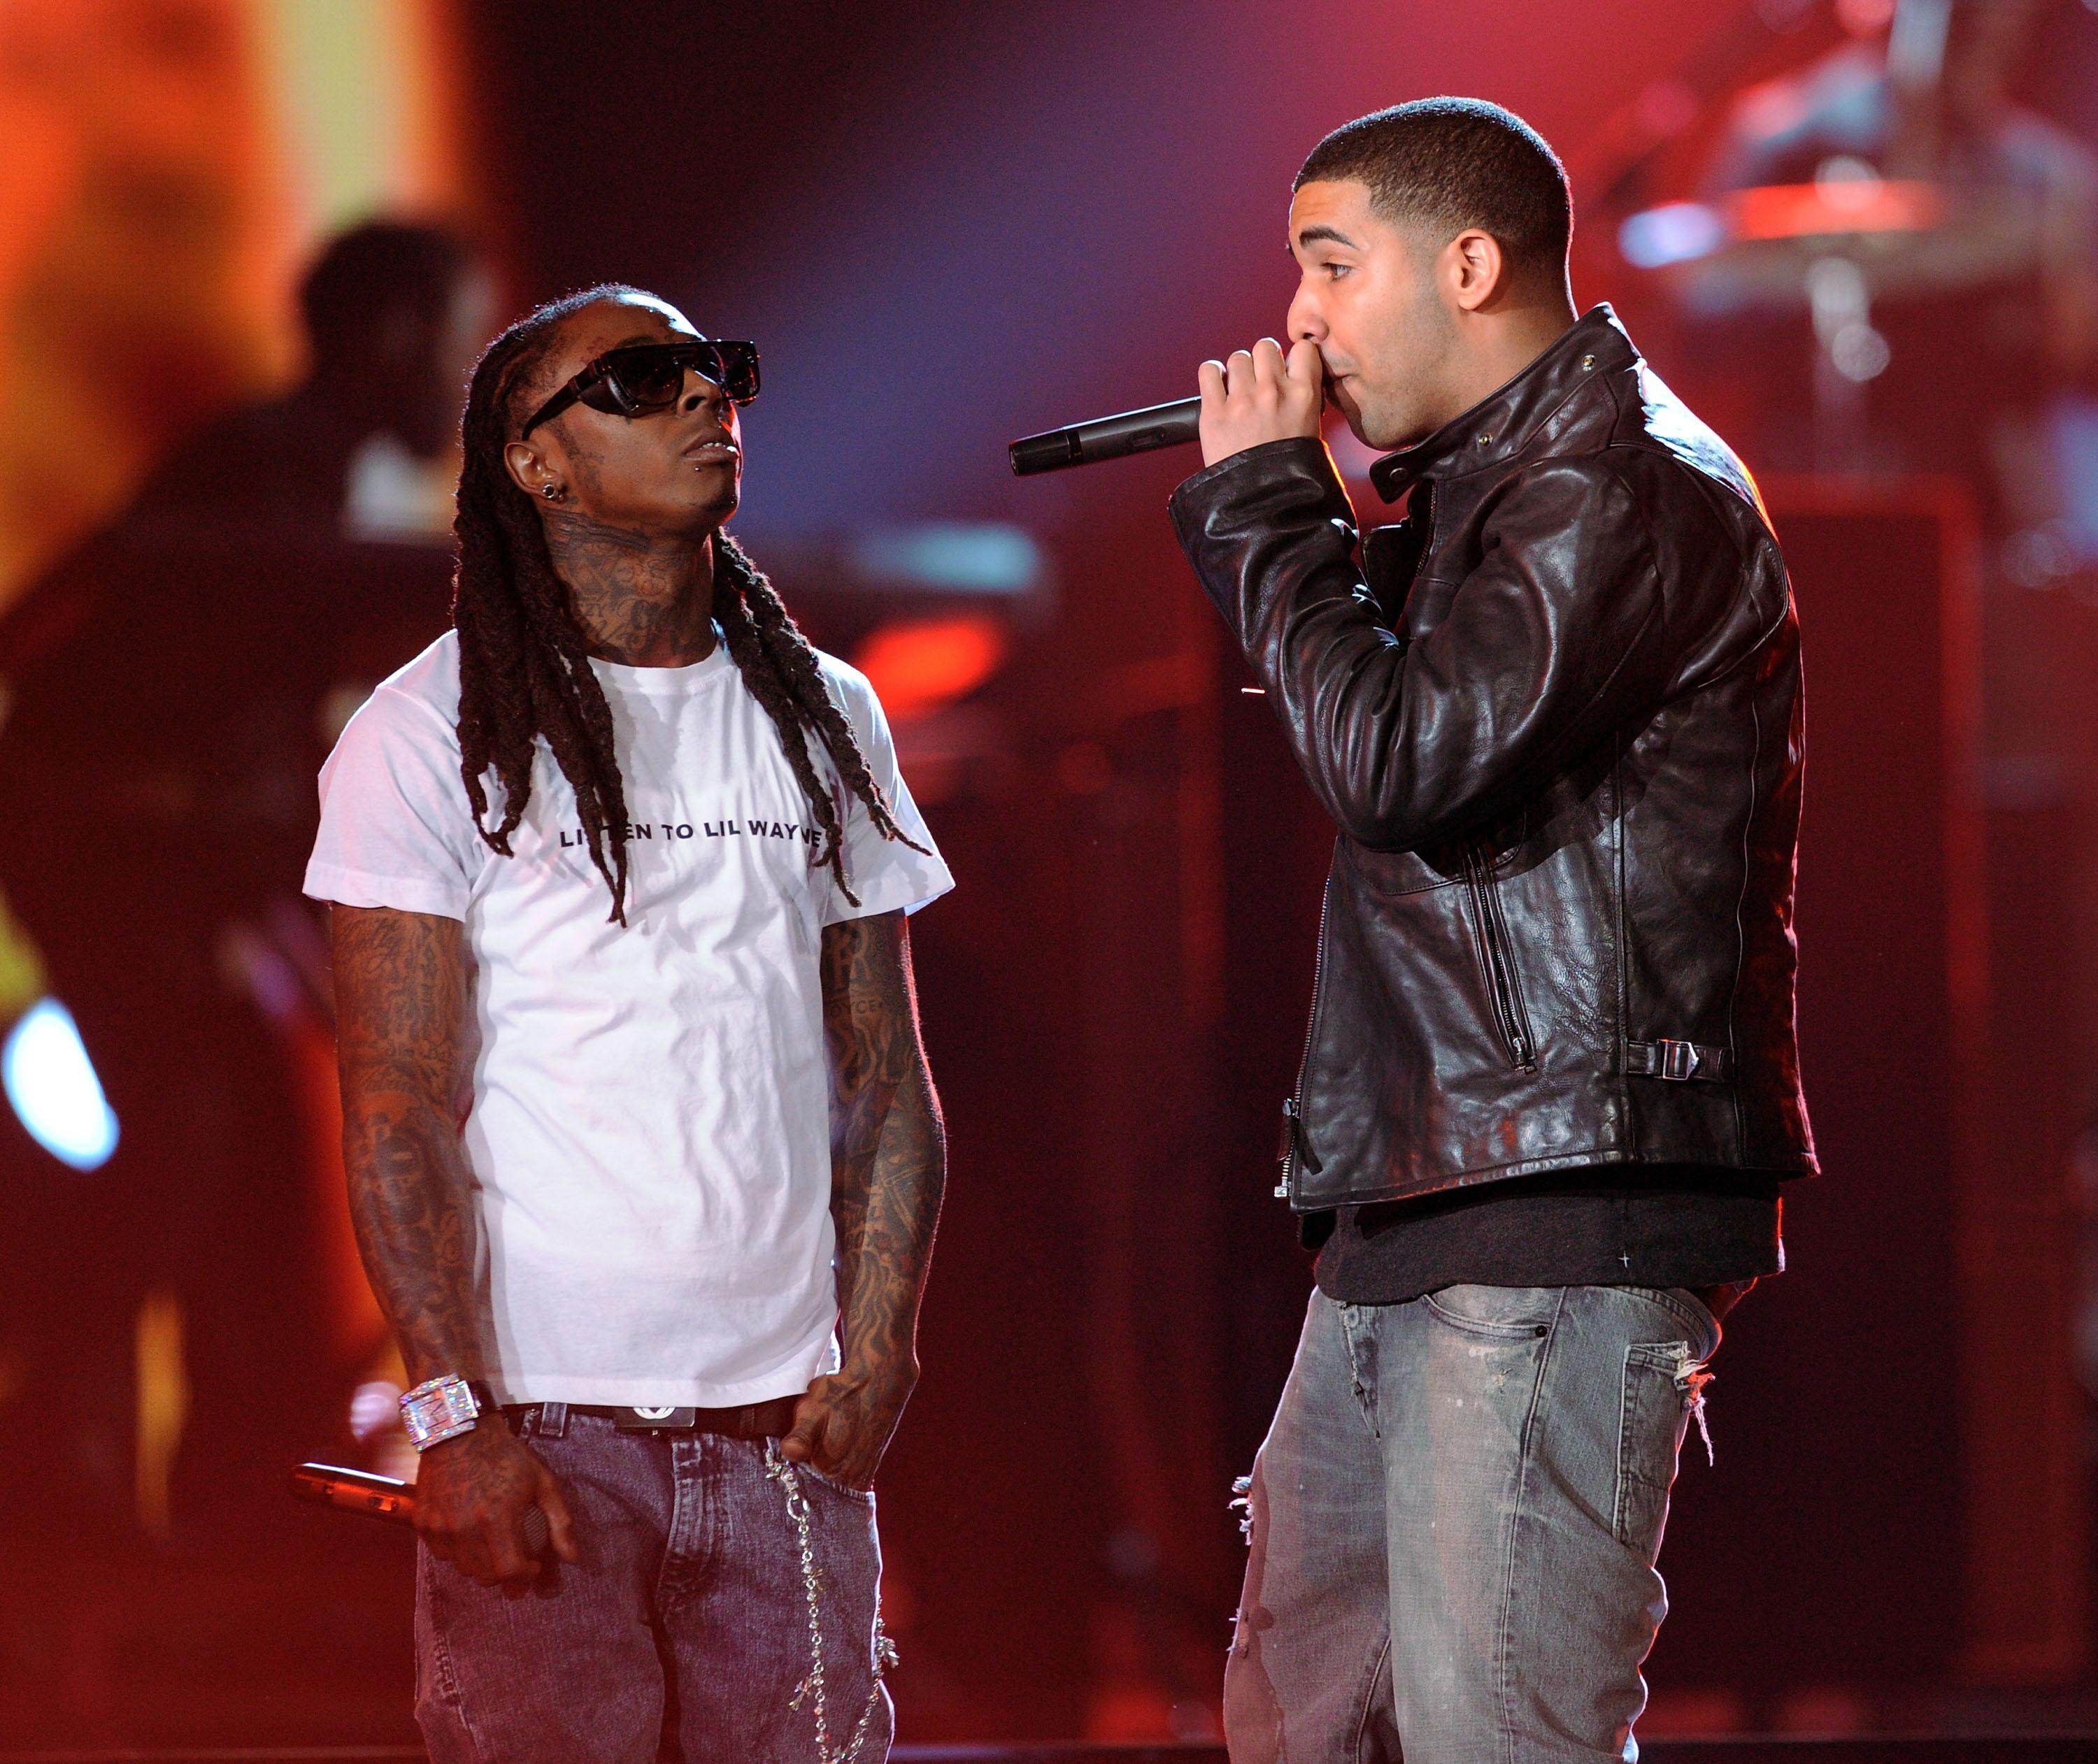 Lil Wayne And Drake And Eminem Viewing Gallery. HD Wallpaper Range